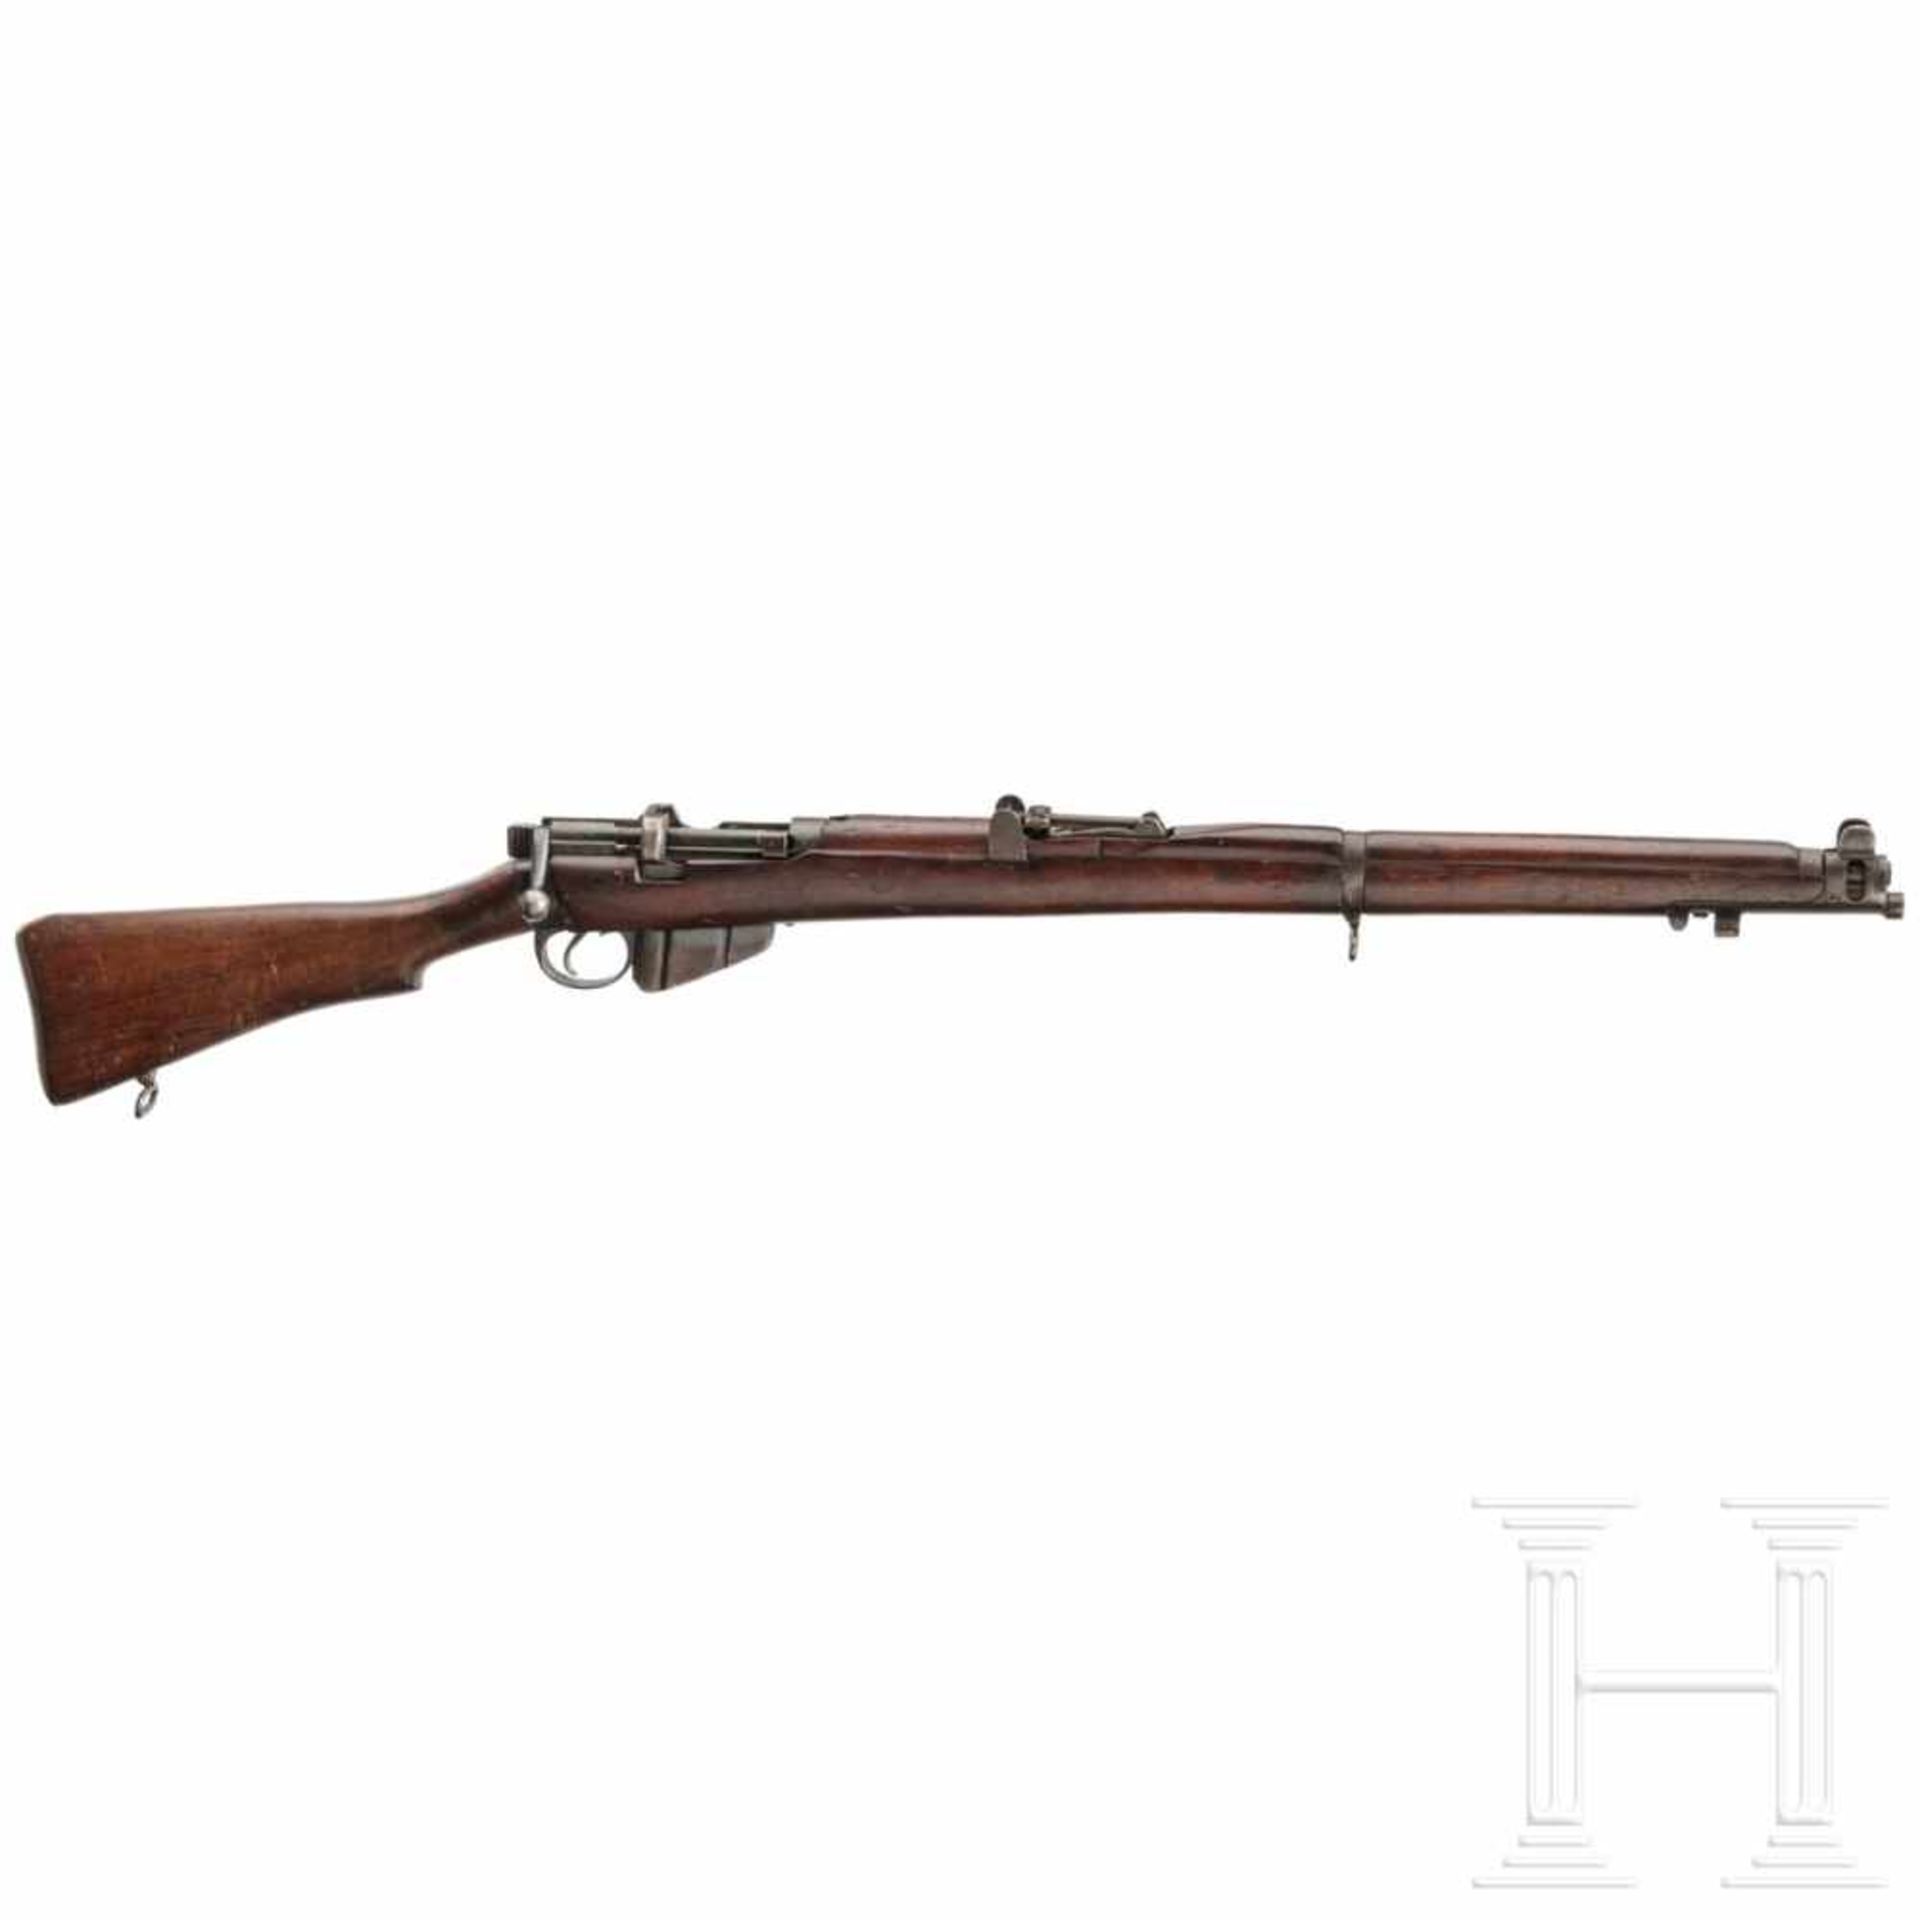 Enfield (SMLE) Rifle No. 1 Mk III*, Ishapore